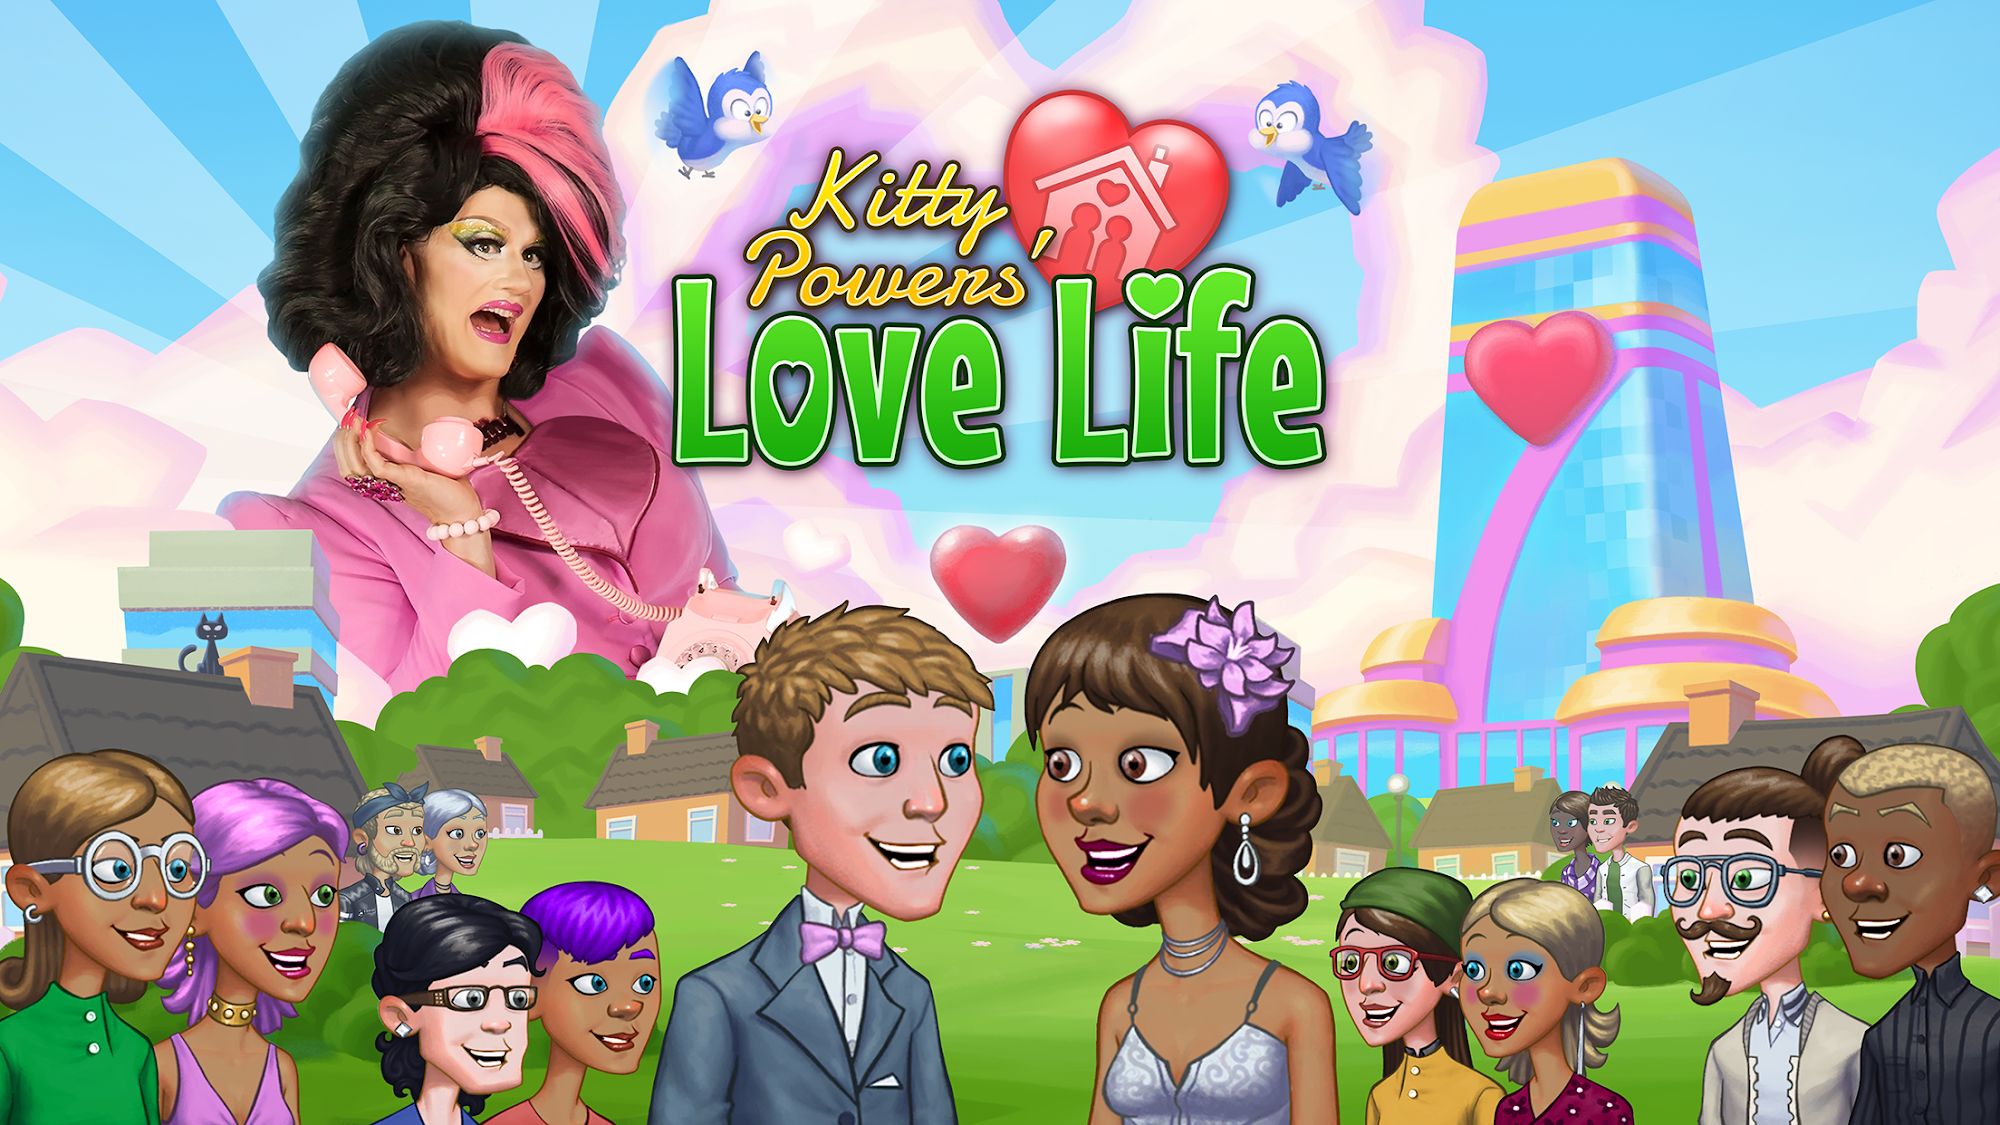 Télécharger Kitty Powers' Love Life pour Android gratuit.